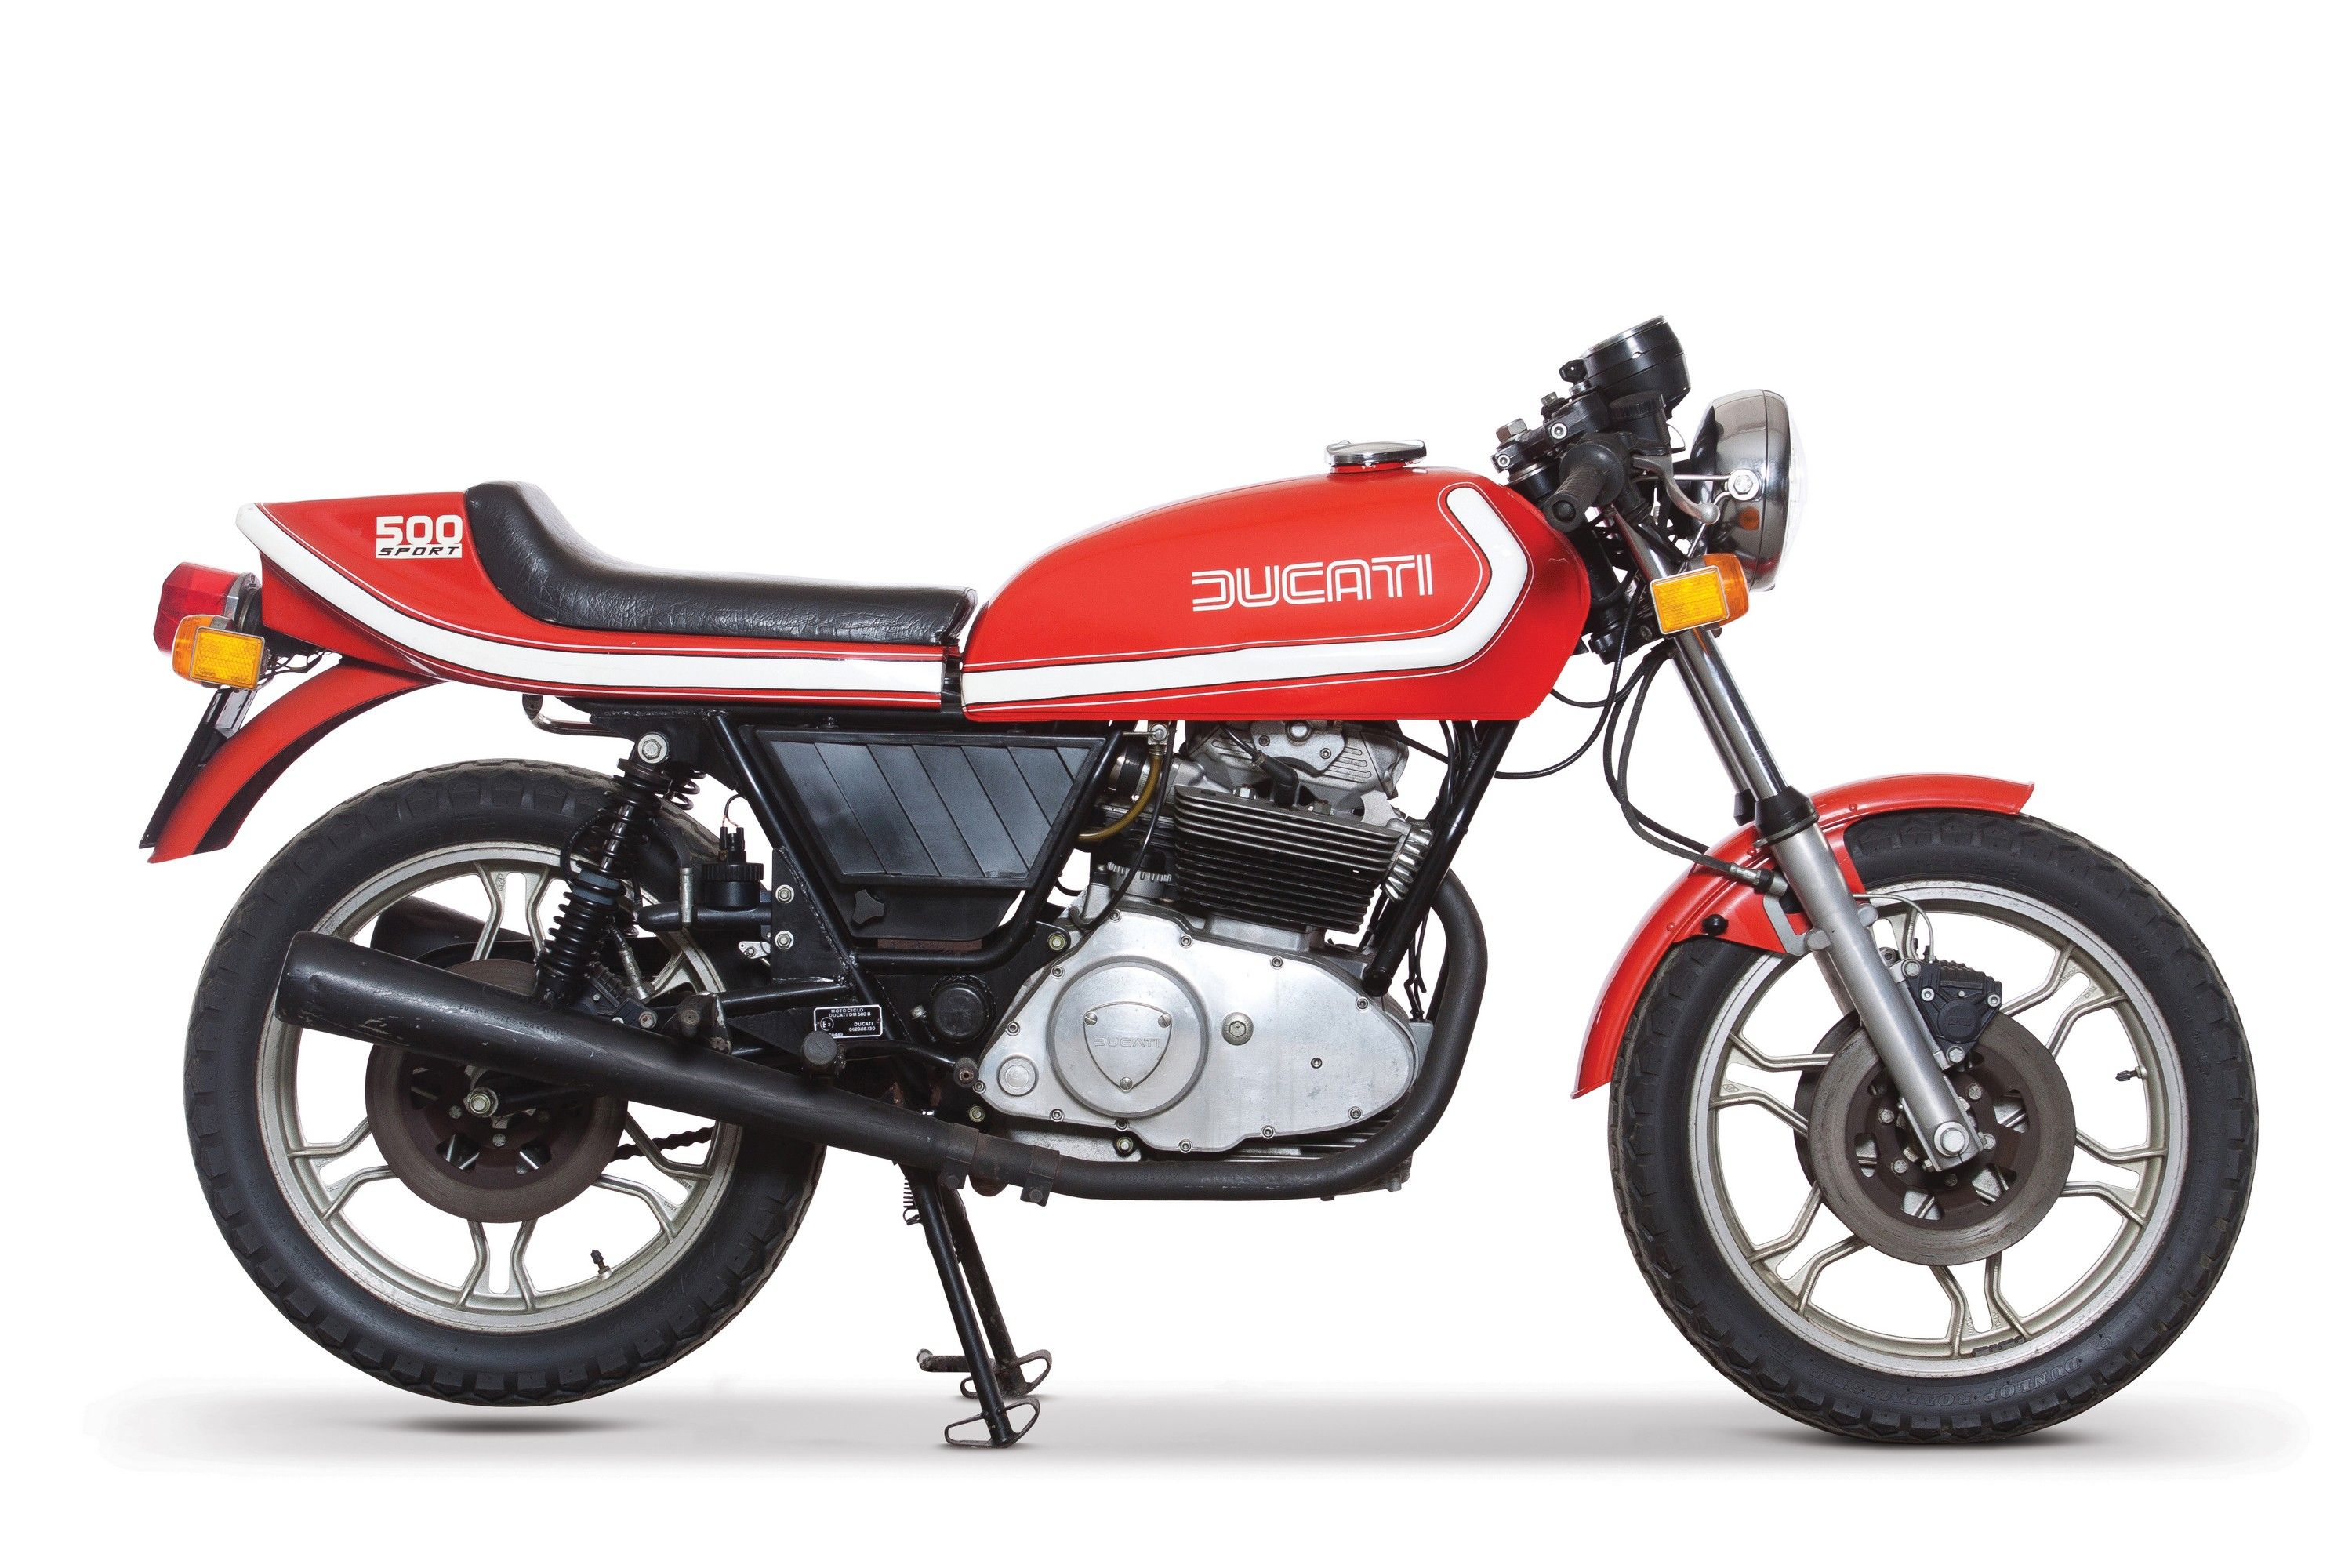 1976 Ducati 500 Sport